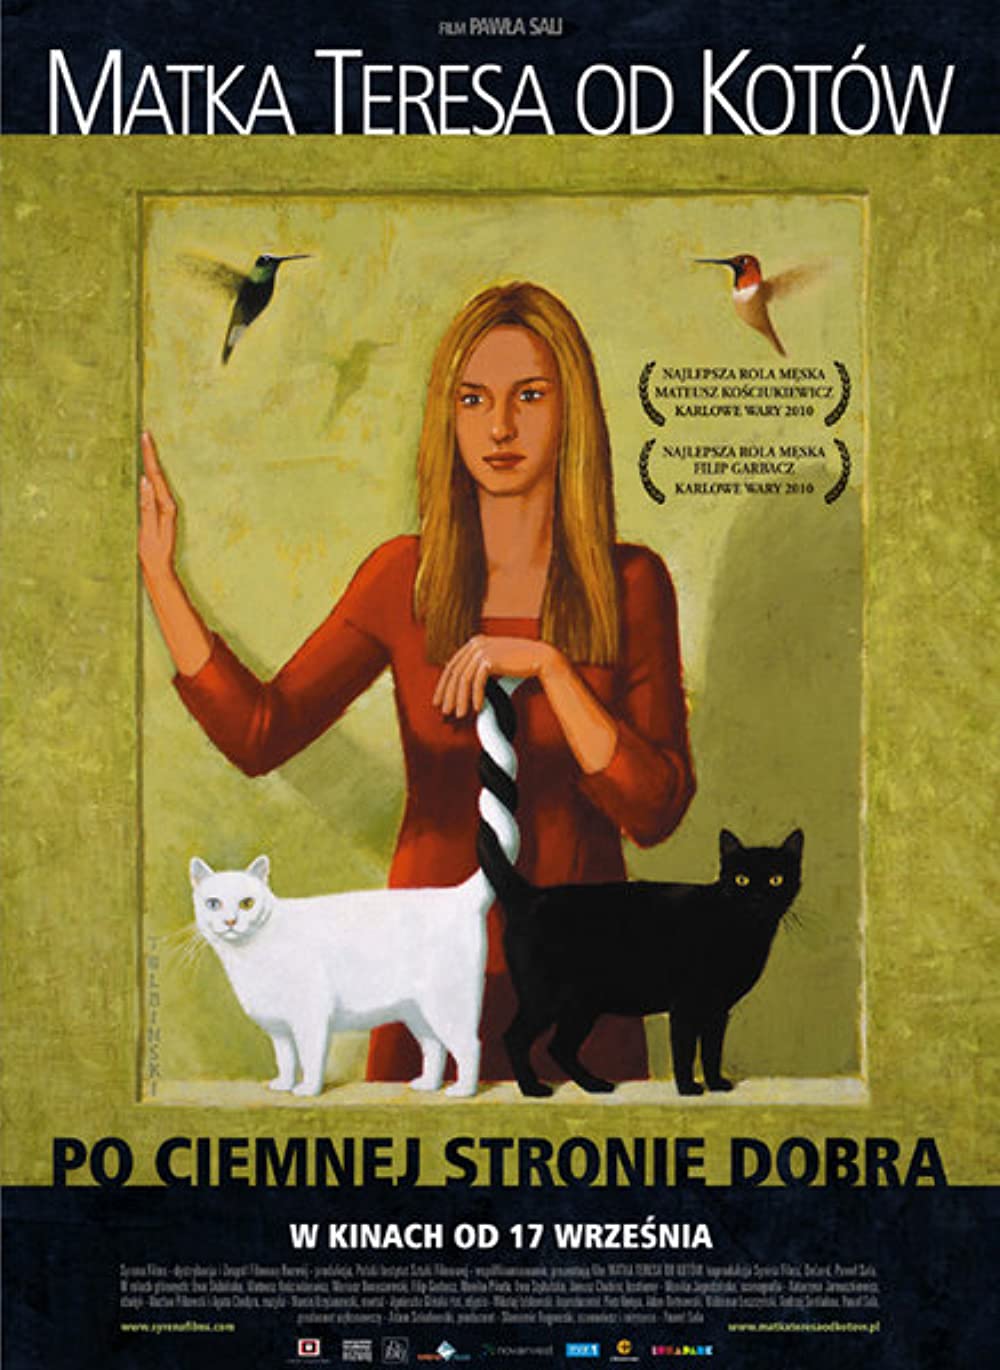 Download Matka Teresa od kotów Movie | Download Matka Teresa Od Kotów Movie Online